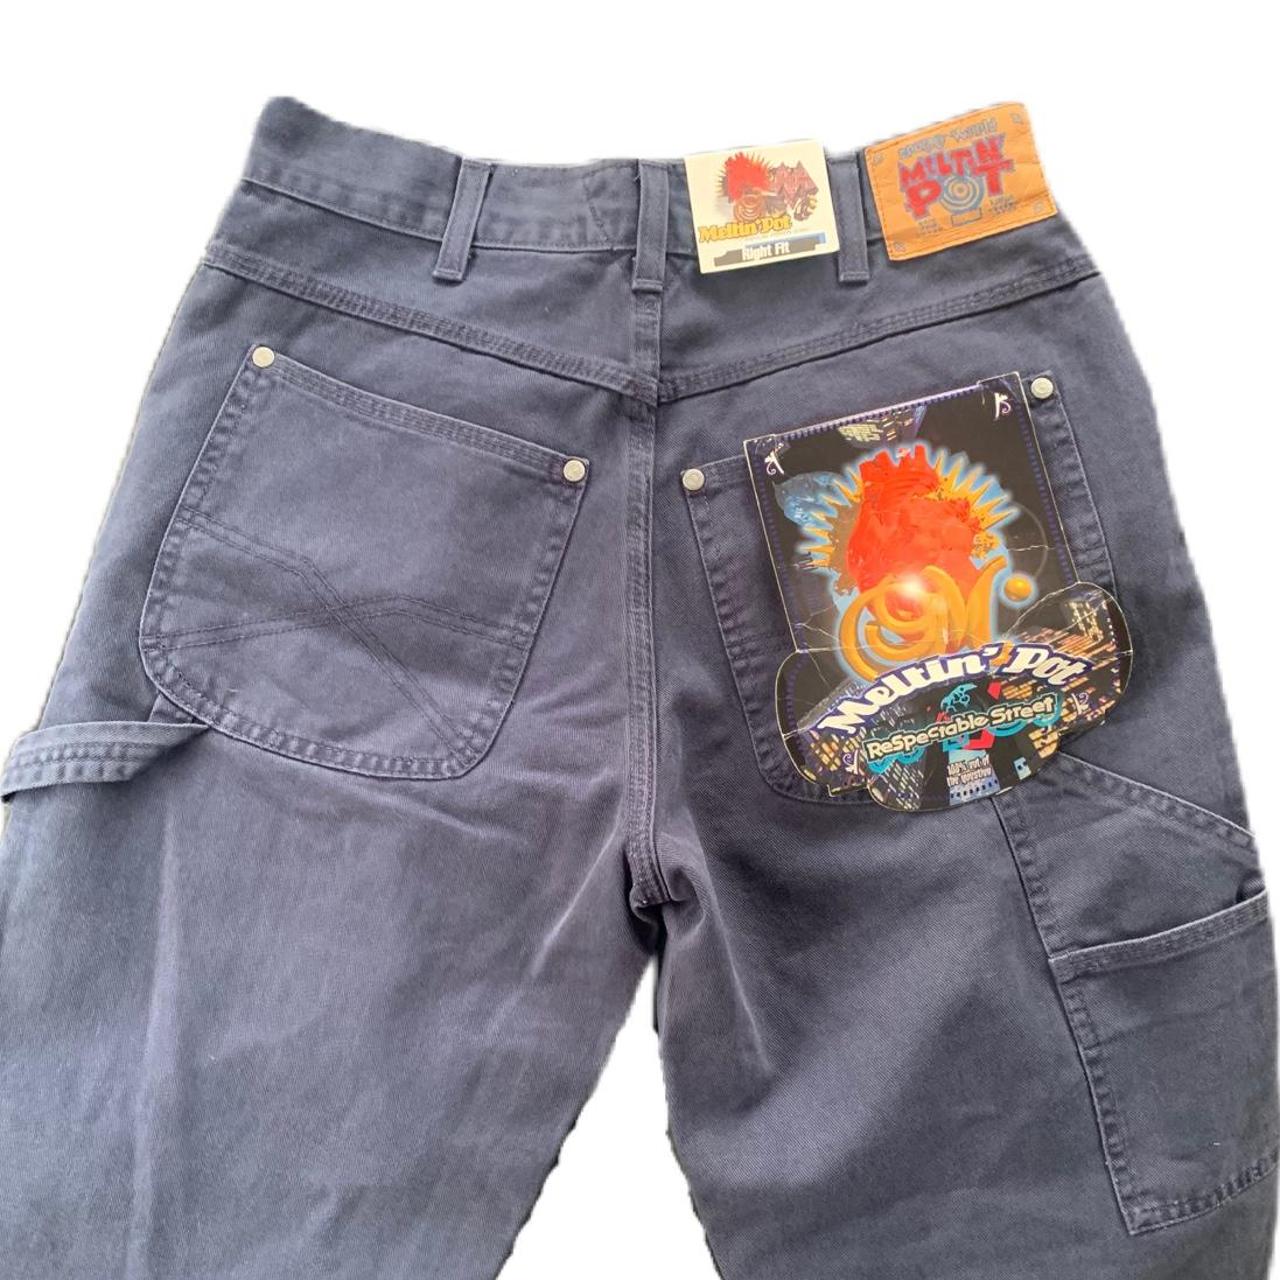 Vintage jeans meltin pot made in Italy 90s... - Depop